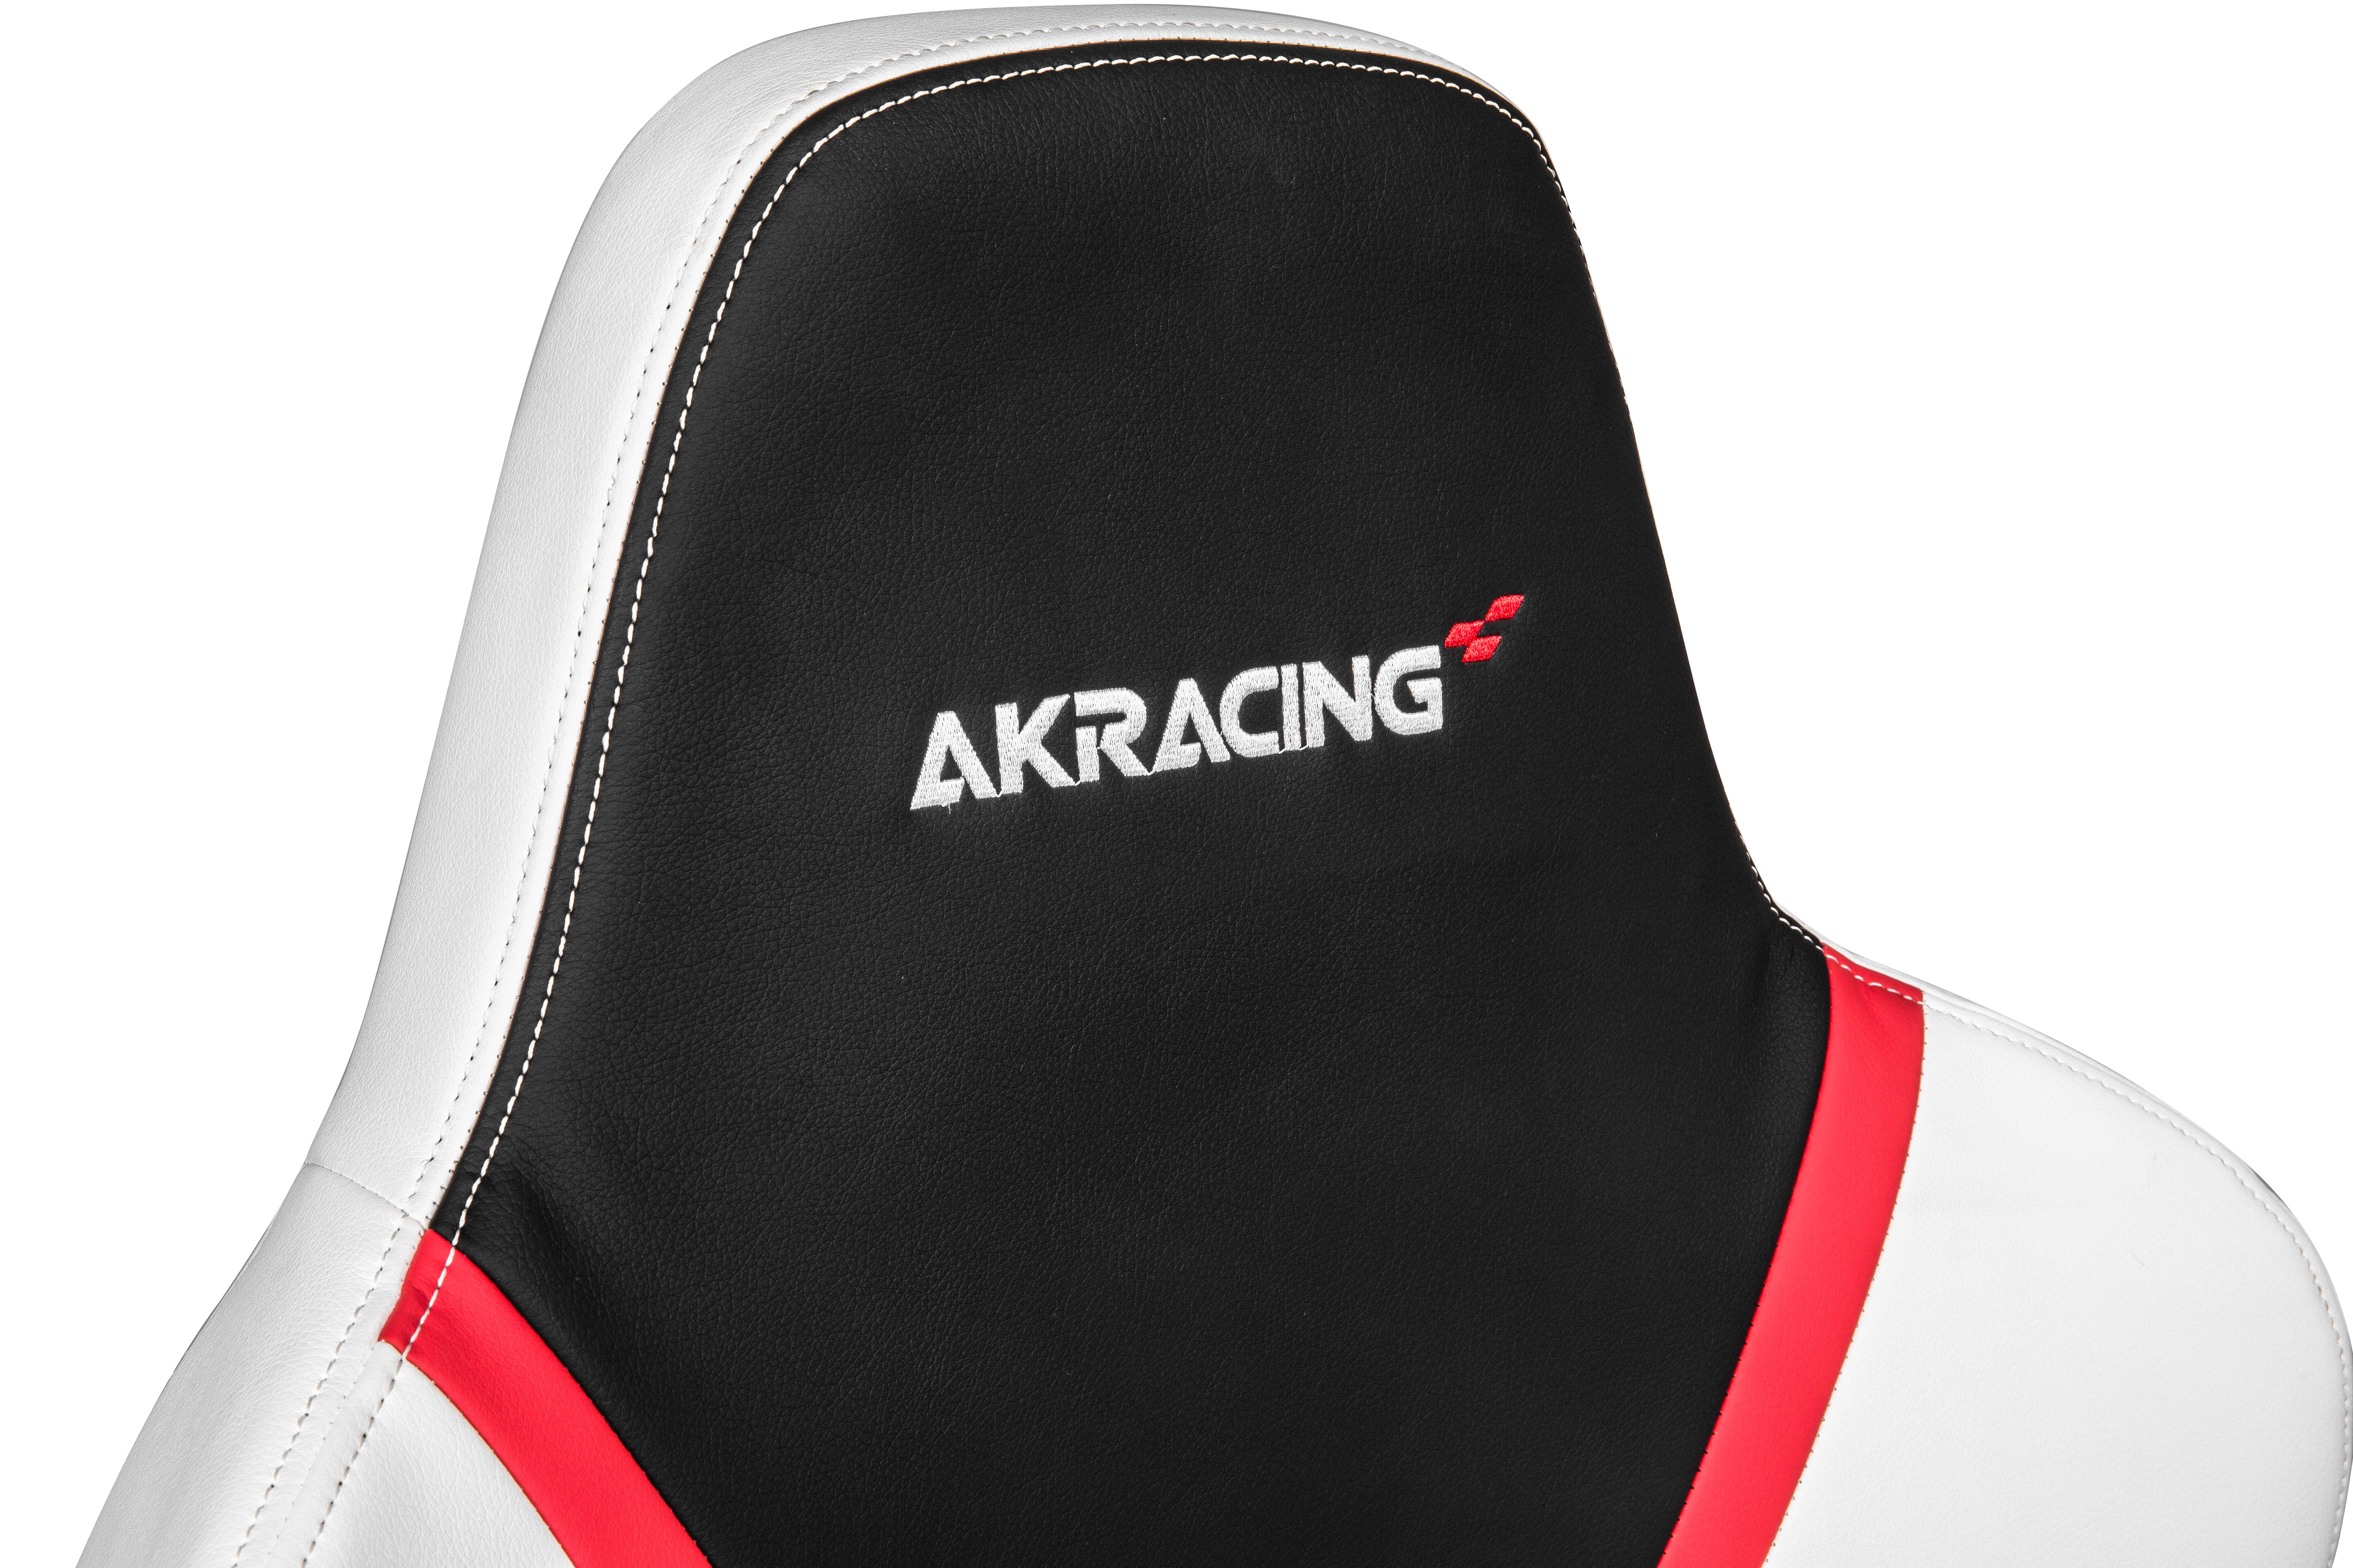 AKRACING Premium Arctica Gamingstuhl, weiß/schwarz/rot